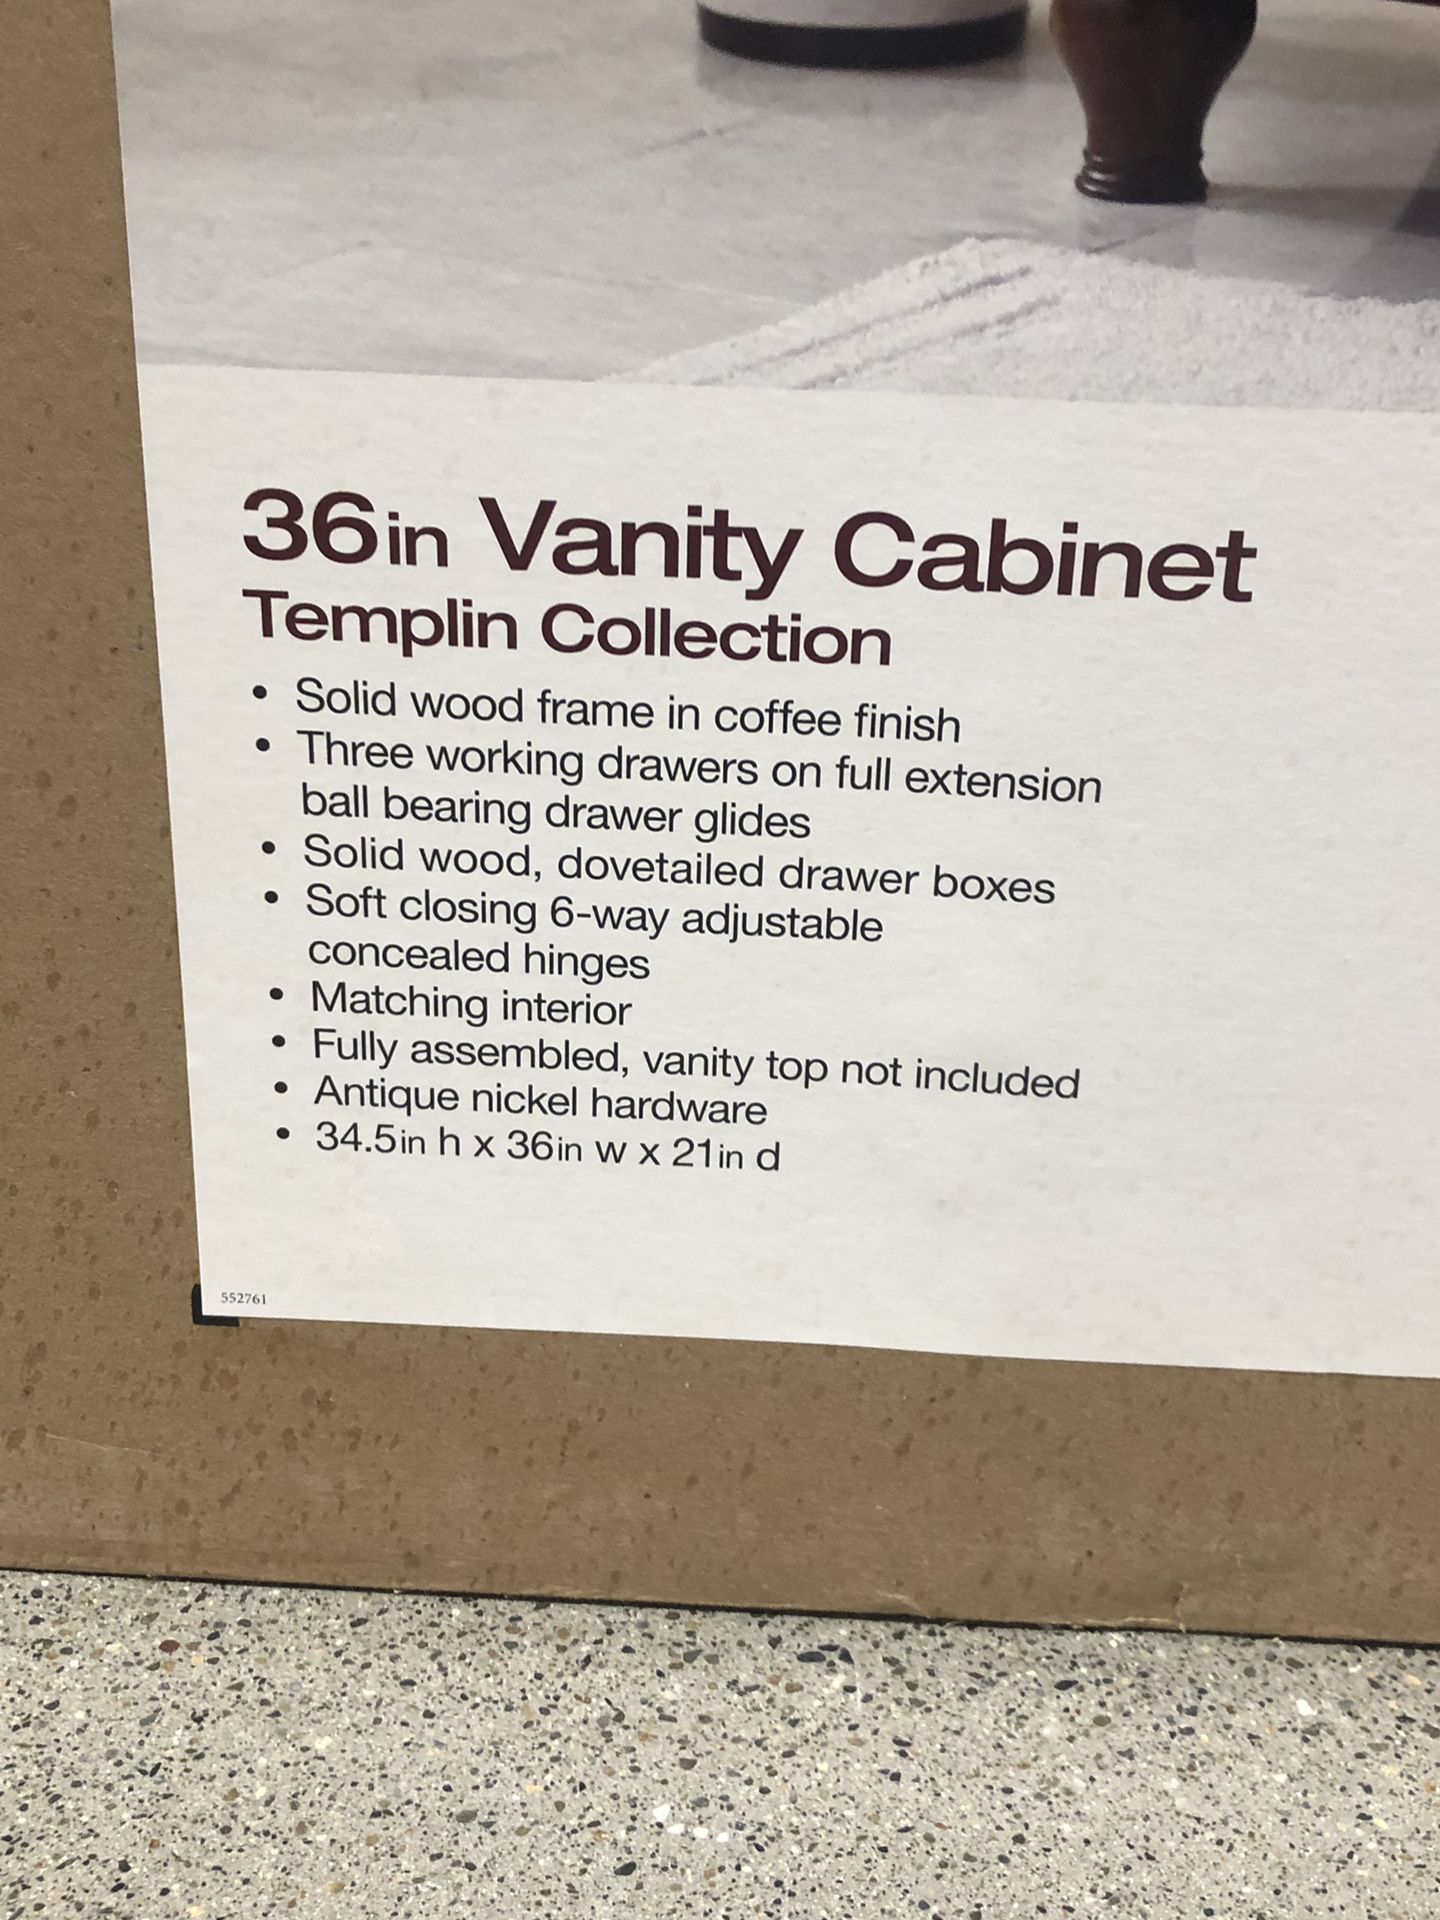 36 in Vanity Cabinet